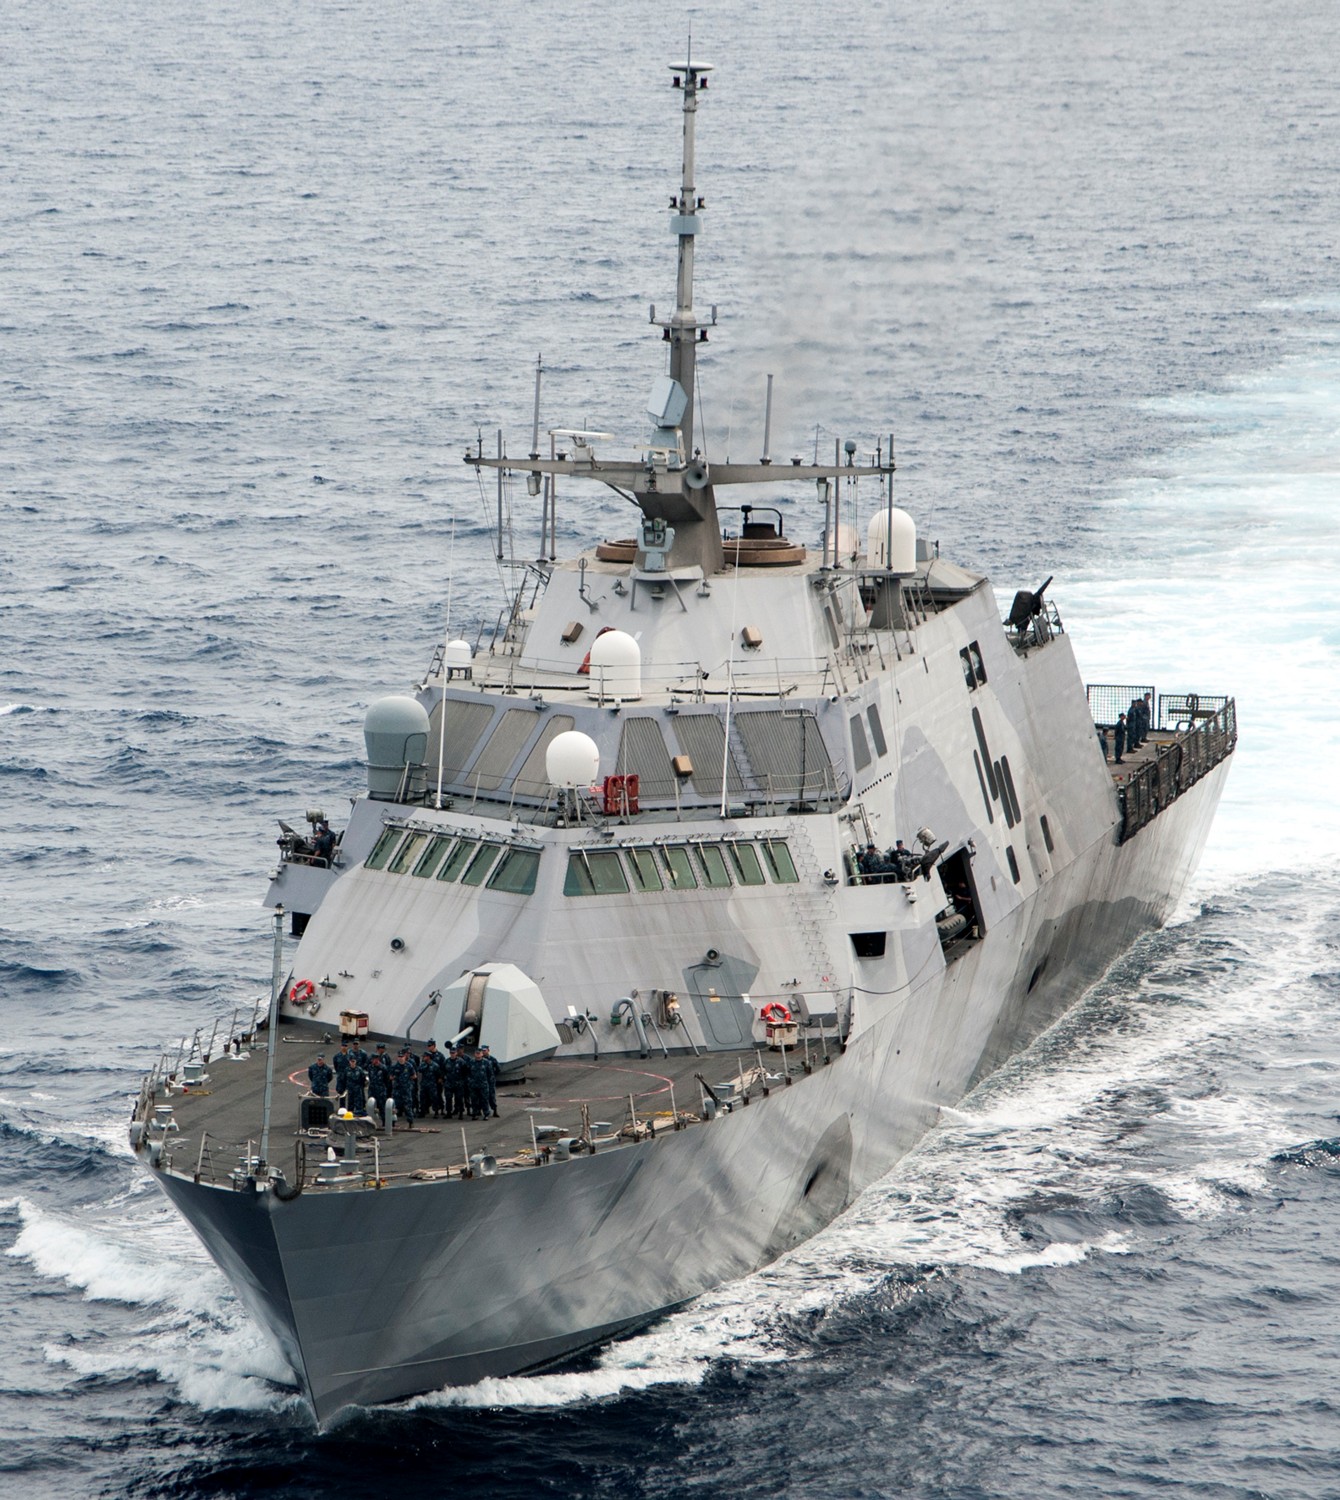 lcs-1 uss freedom class littoral combat ship us navy 13 pearl harbor hawaii